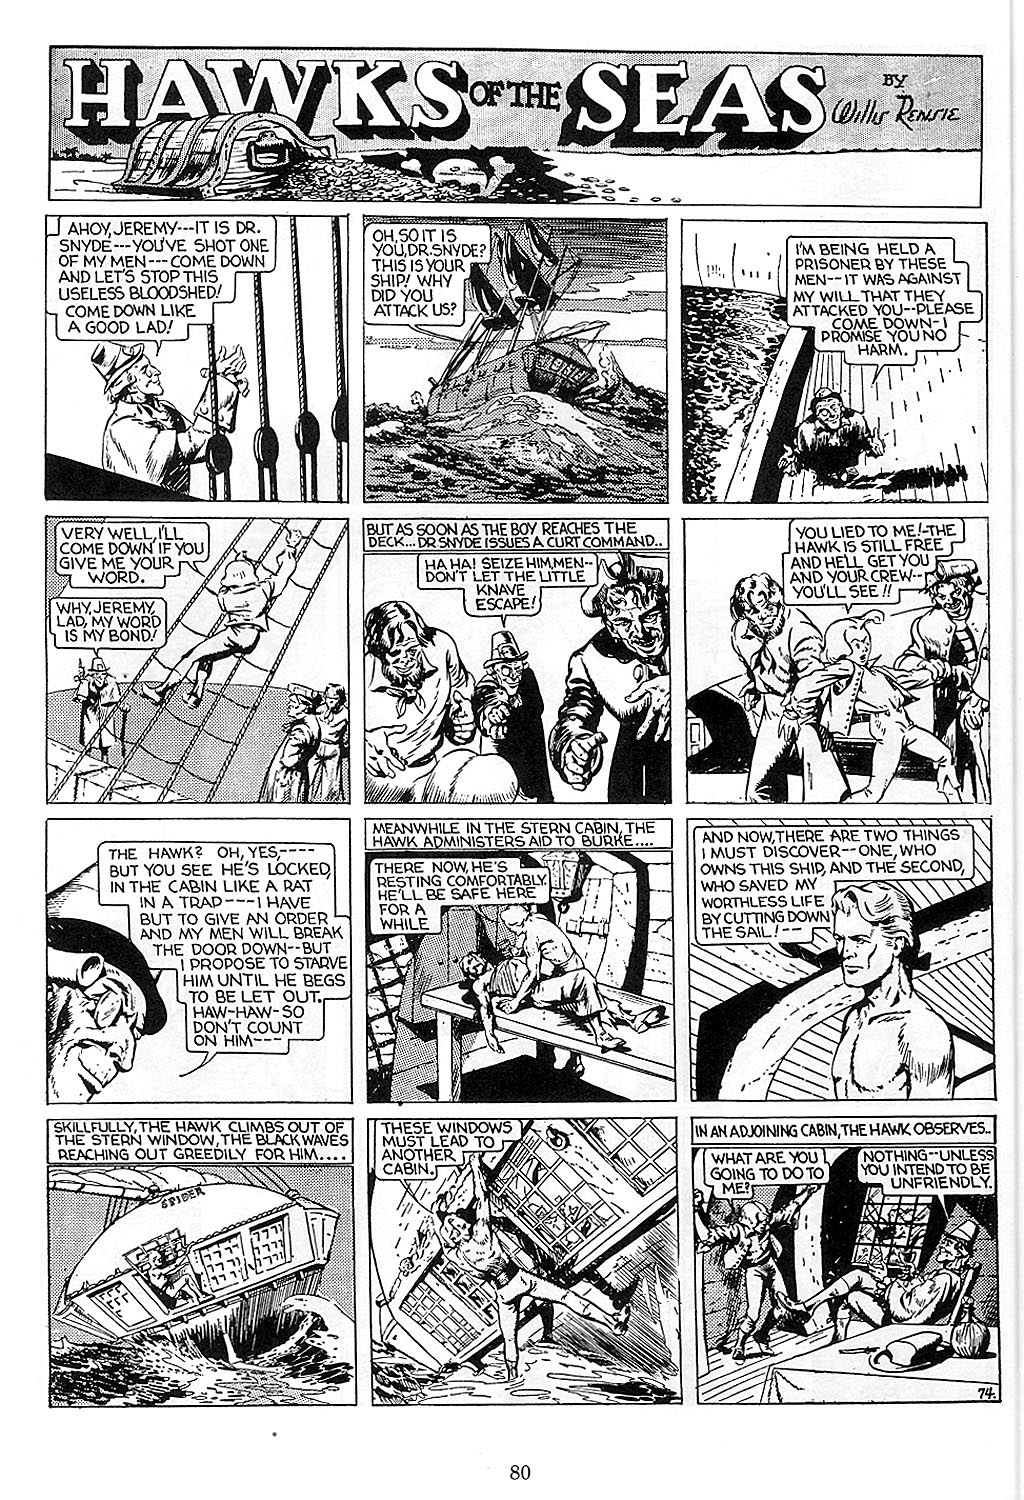 Read online Will Eisner's Hawks of the Seas comic -  Issue # TPB - 81